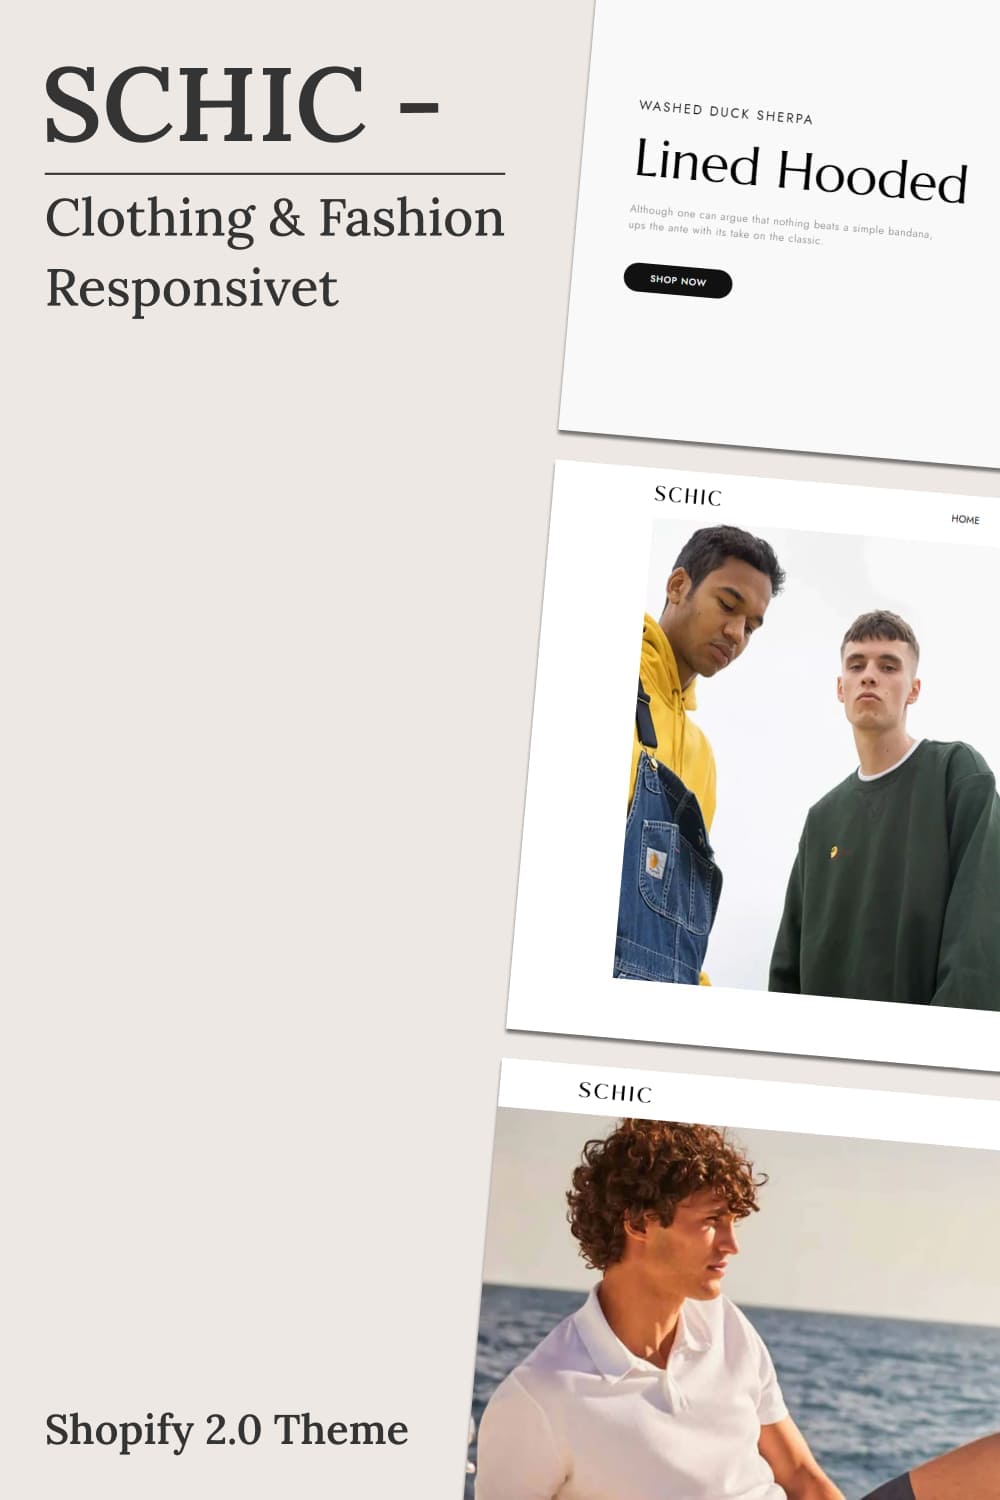 Schic clothing fashion responsive shopify 2.0 theme, image for pinterest.